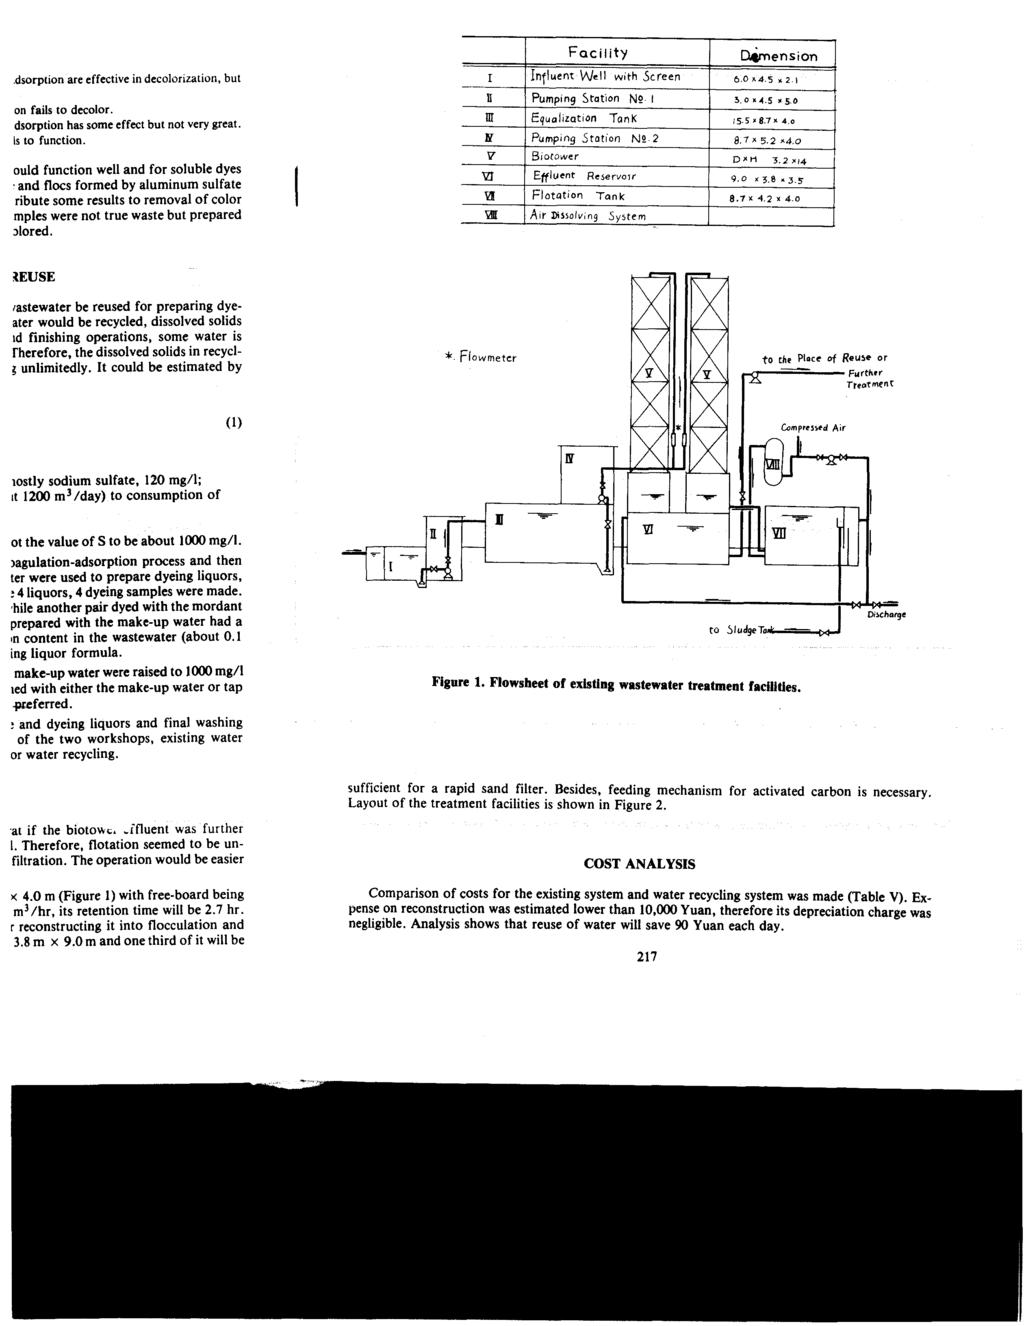 0 Dl E Fac i I ity Pumping Station NO I D&en s I on - _-_. 30x45 a50 Equalization TanK 15 5 r87x 4 0 Pumping Stotion NO 2 a 735 2 o * Flowmeter Figure 1.